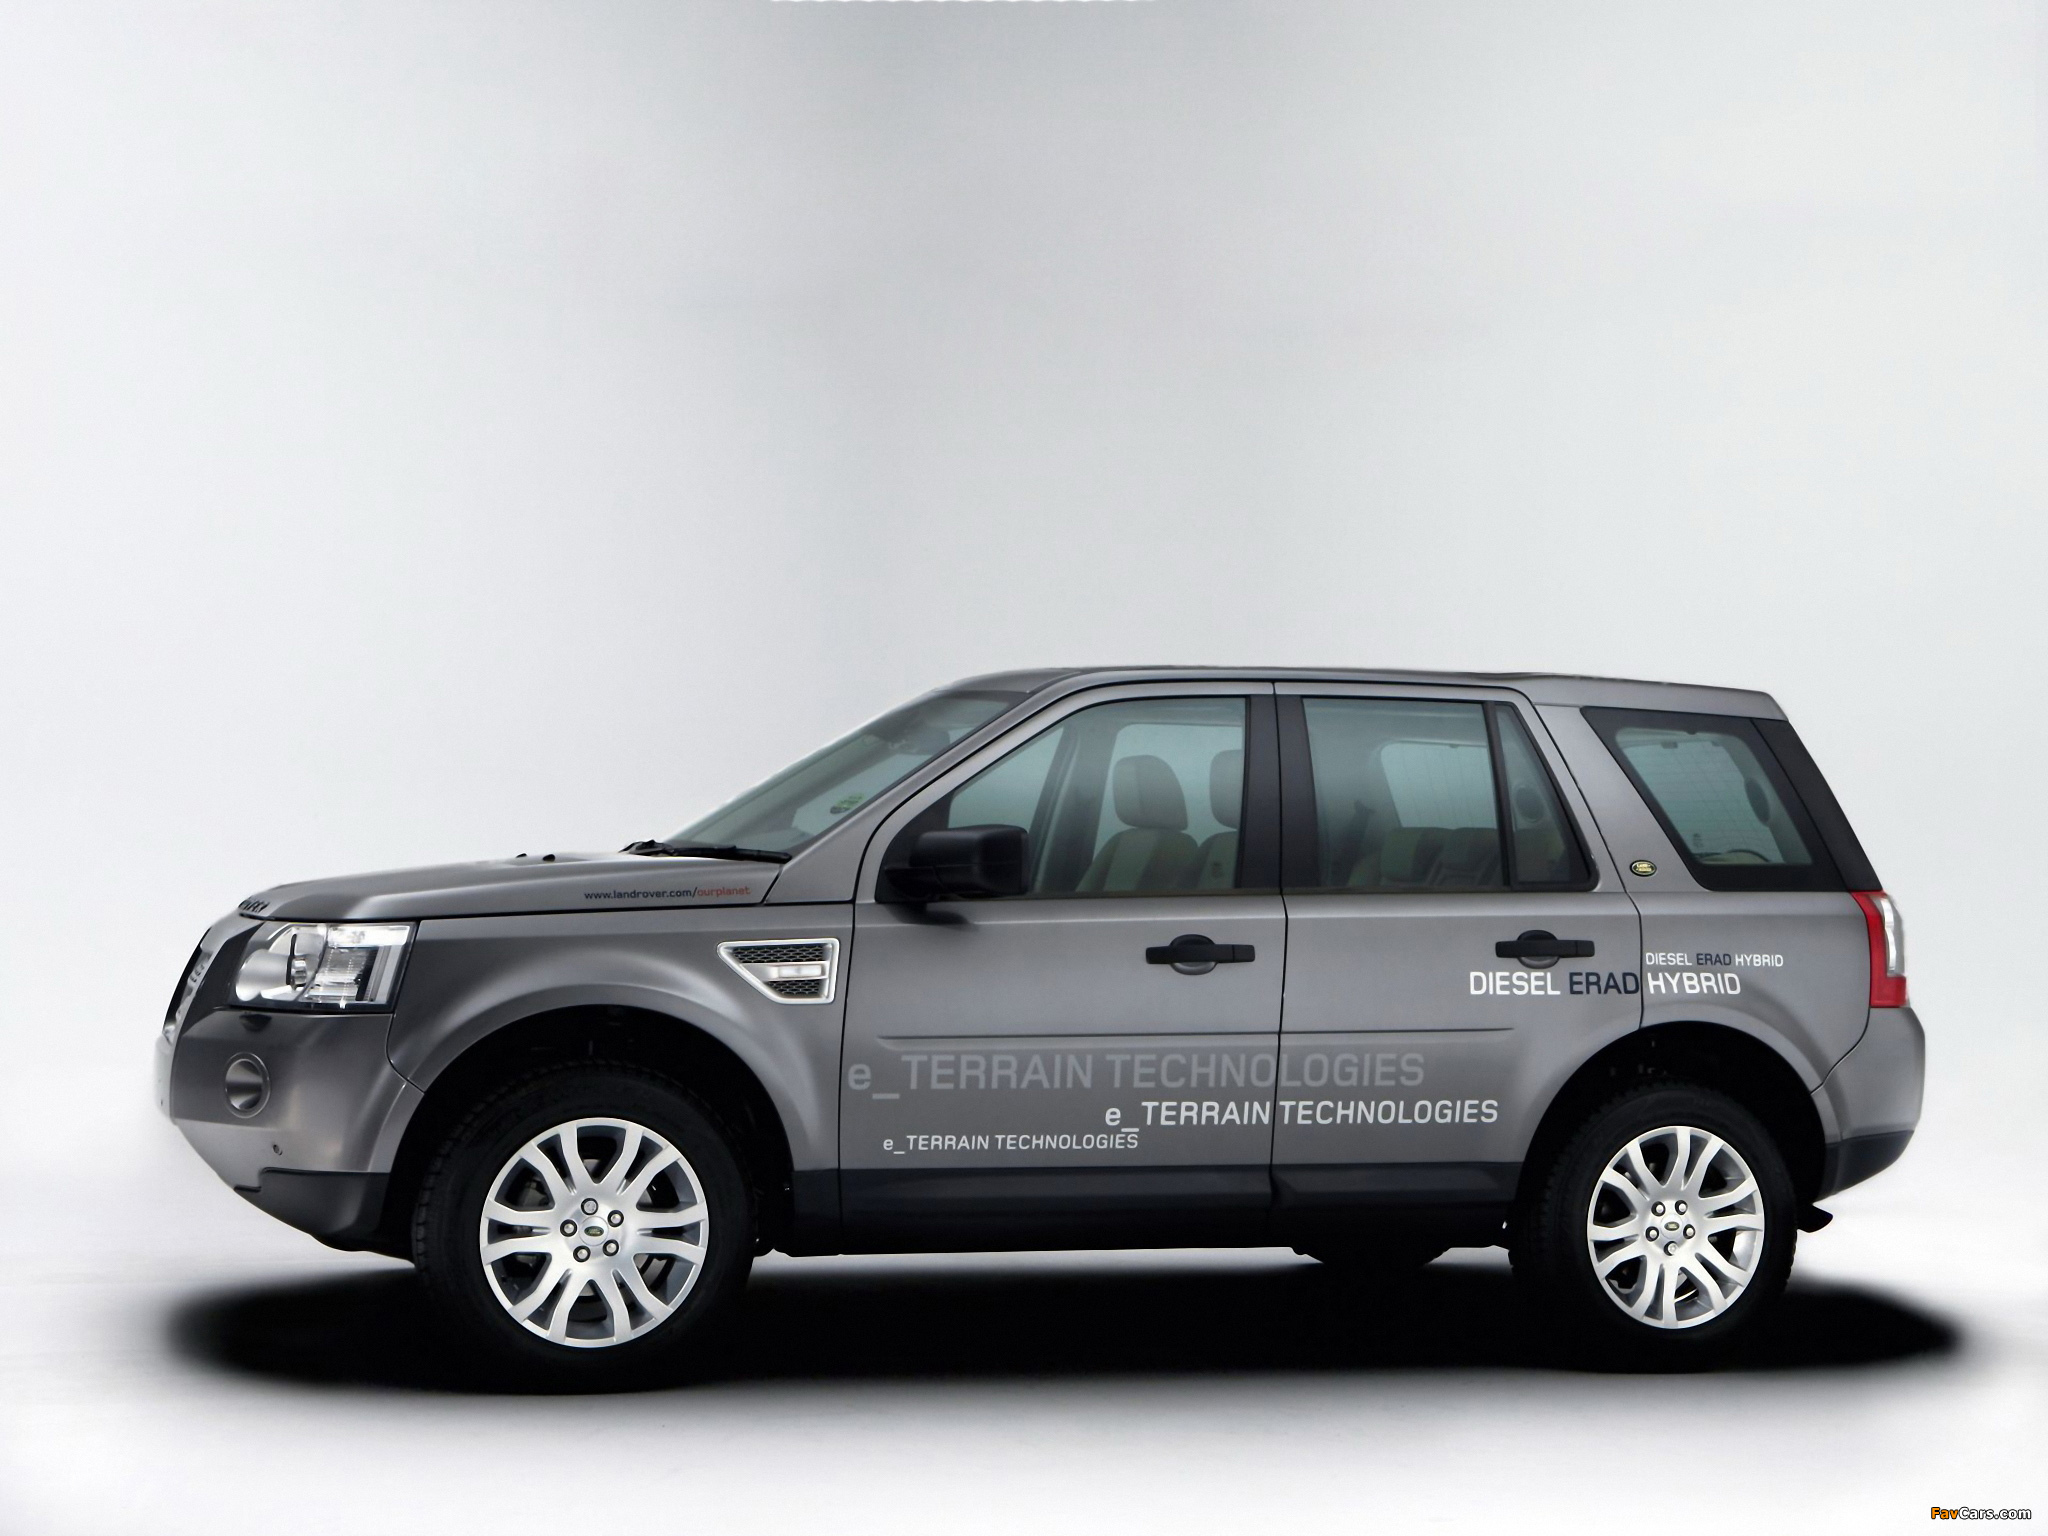 Pictures of Land Rover Diesel ERAD Hybrid Prototype 2008 (2048 x 1536)